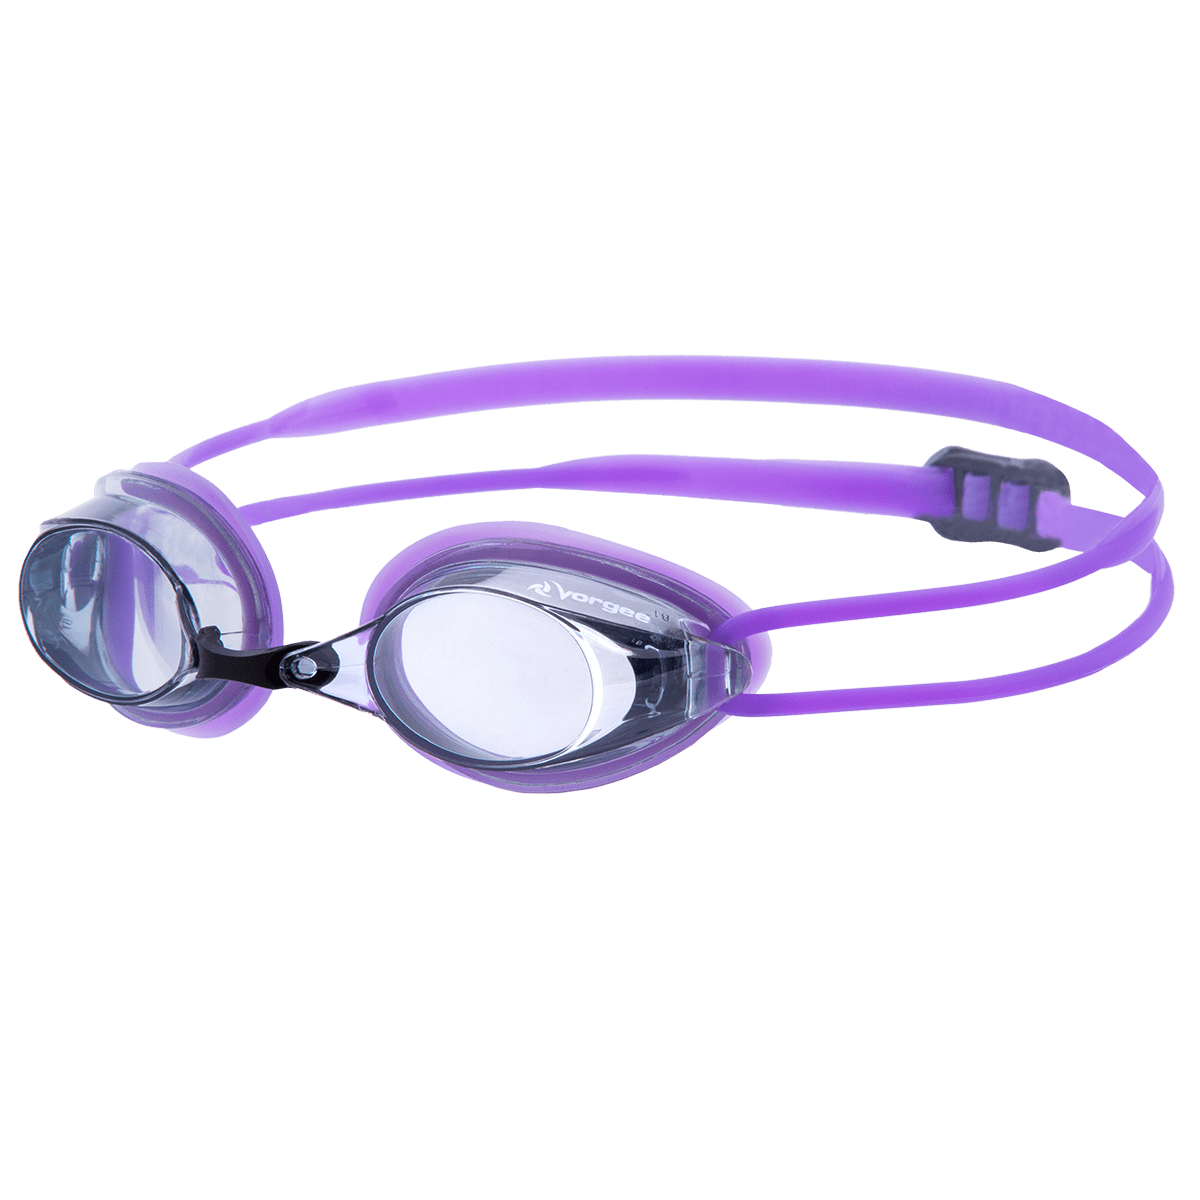 Vorgee Missile ™- Tinted Lens Swim Goggle by Vorgee - Ocean Junction